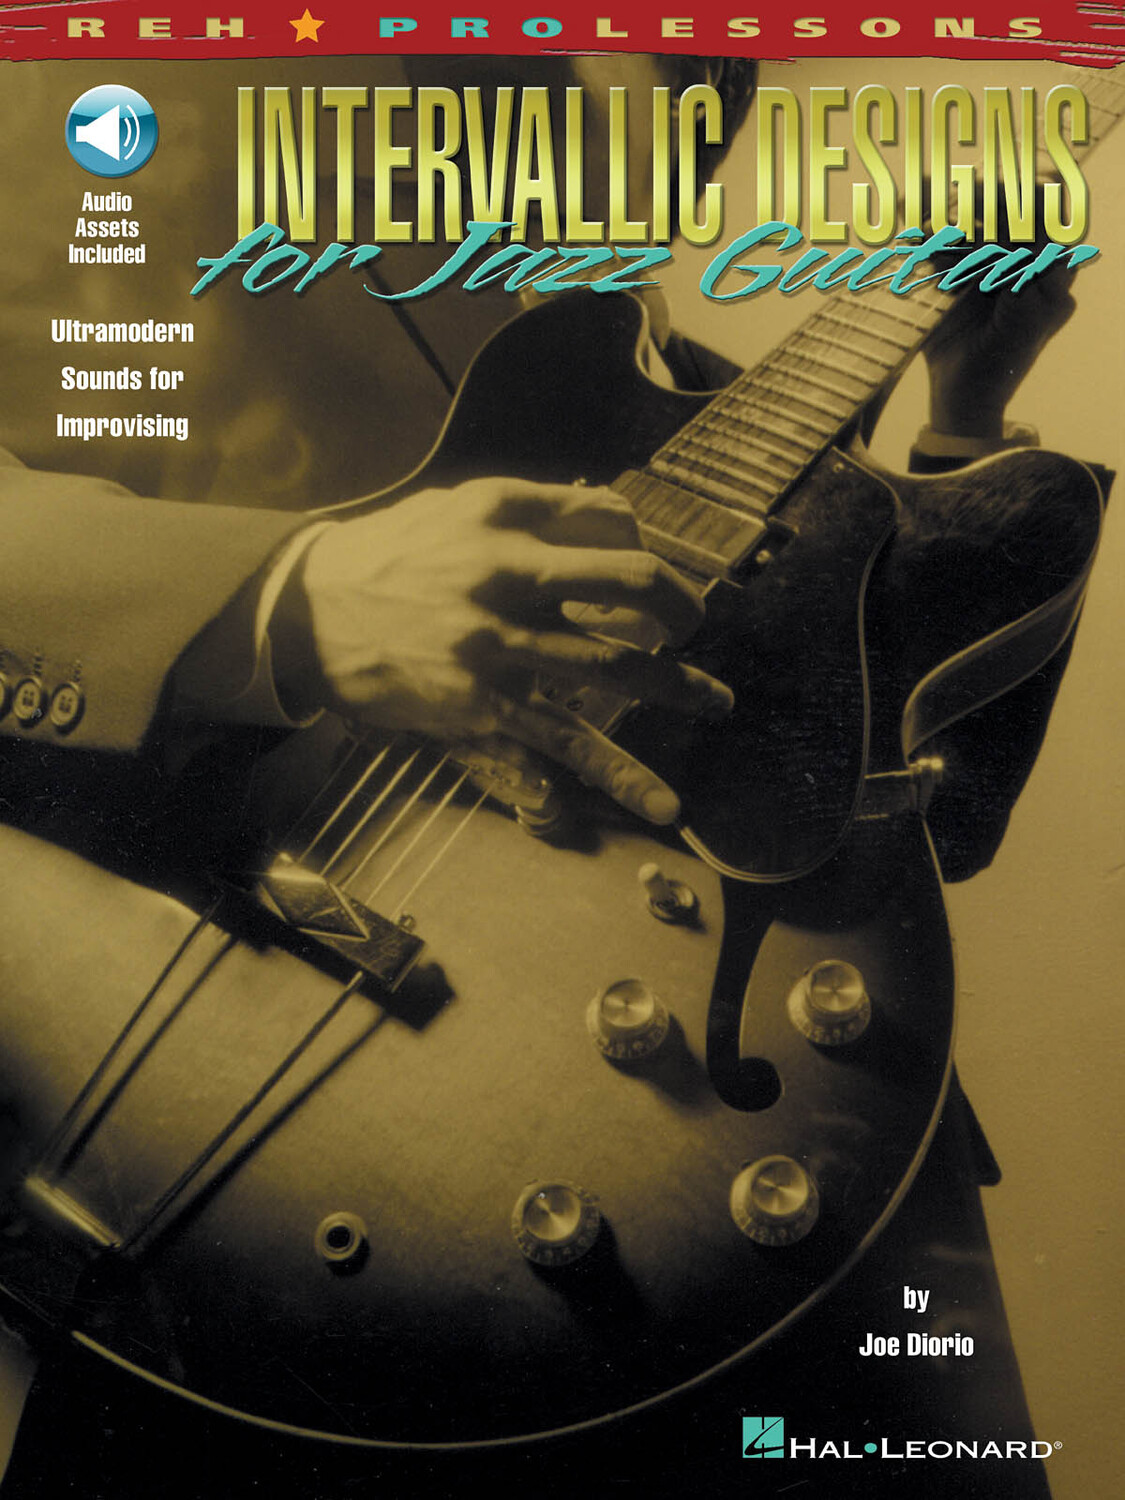 Cover: 73999955651 | Intervallic Designs For Jazz Guitar | Joe Diorio | REH Publications